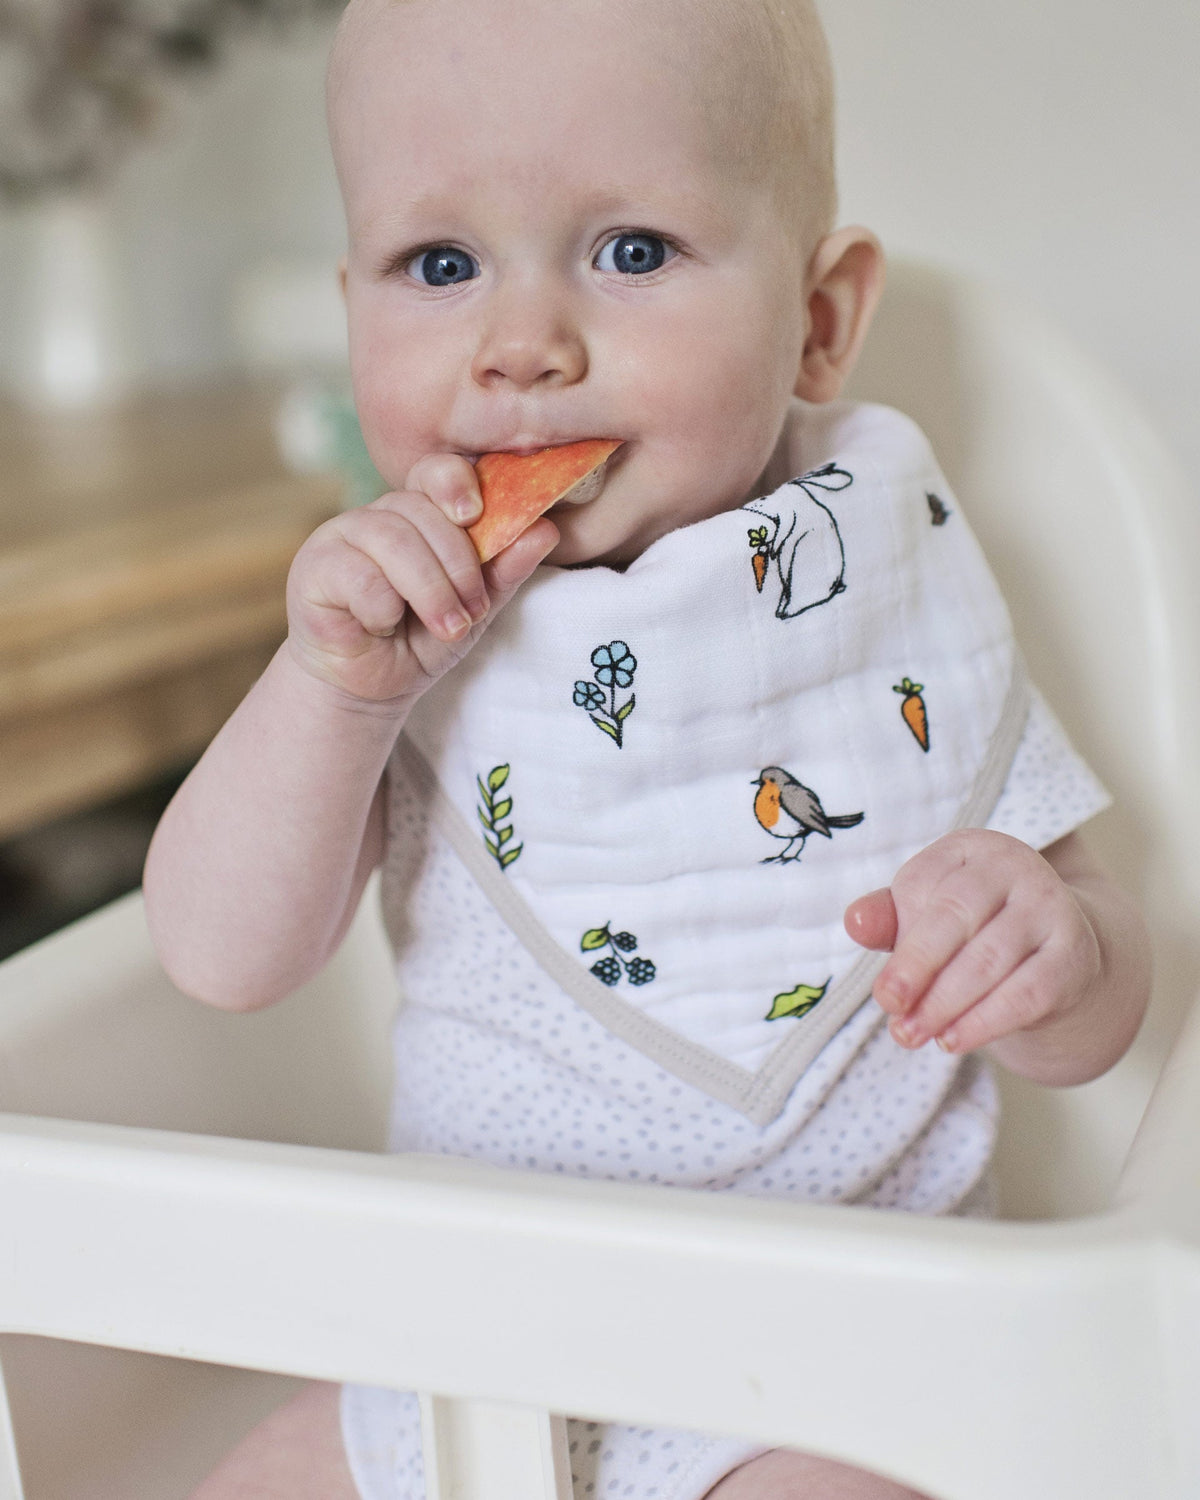 Adjustable organic baby bandana bib with woodland pattern worn by baby eating an apple